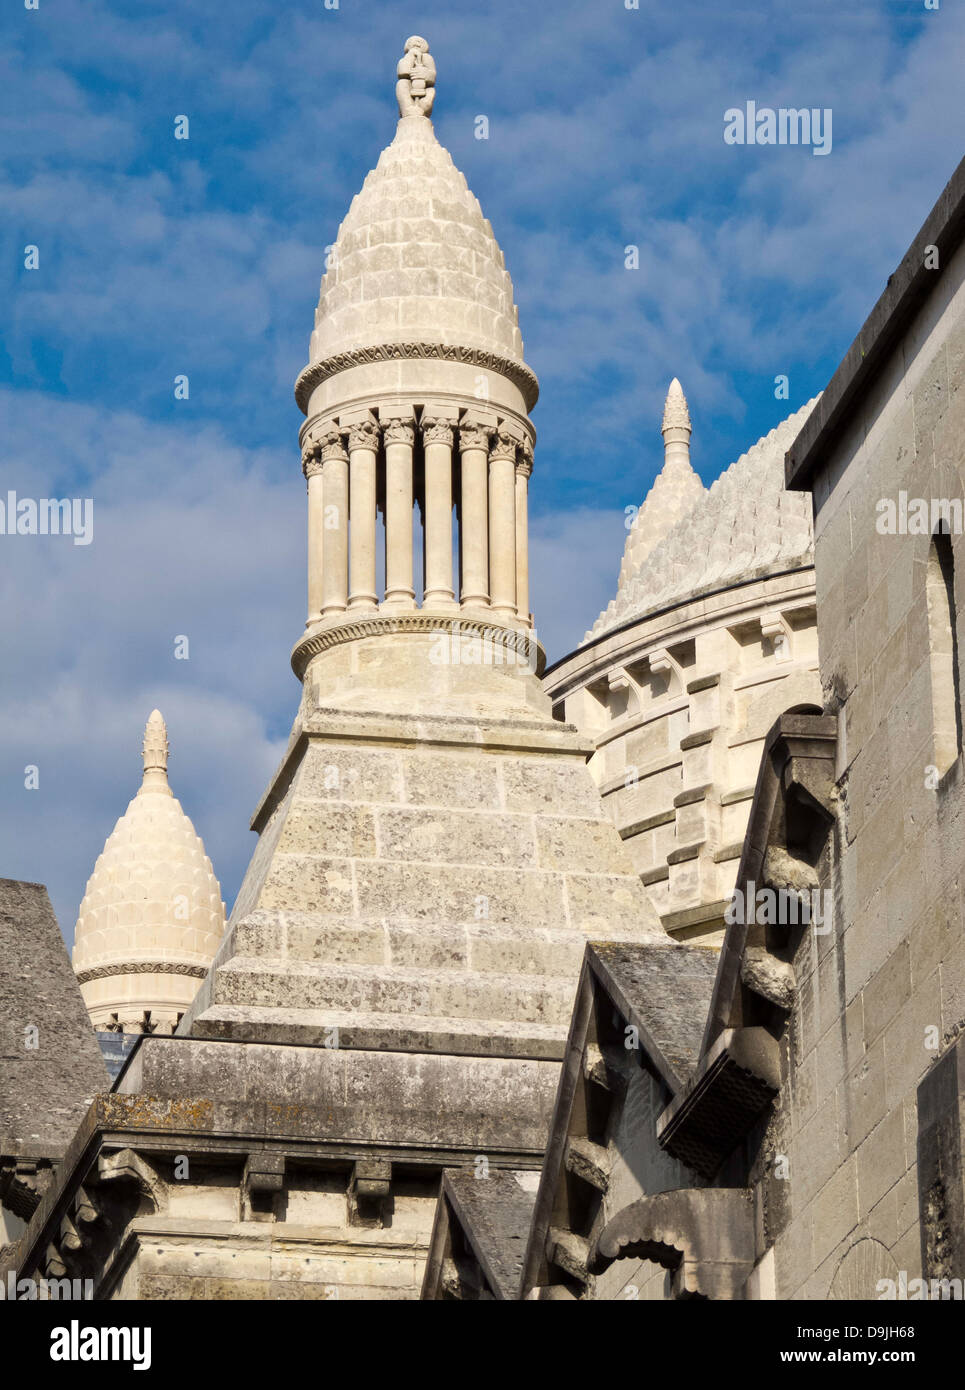 Dachdetails und Kuppeln der St Front Cathedral, Perigueux, Frankreich Stockfoto